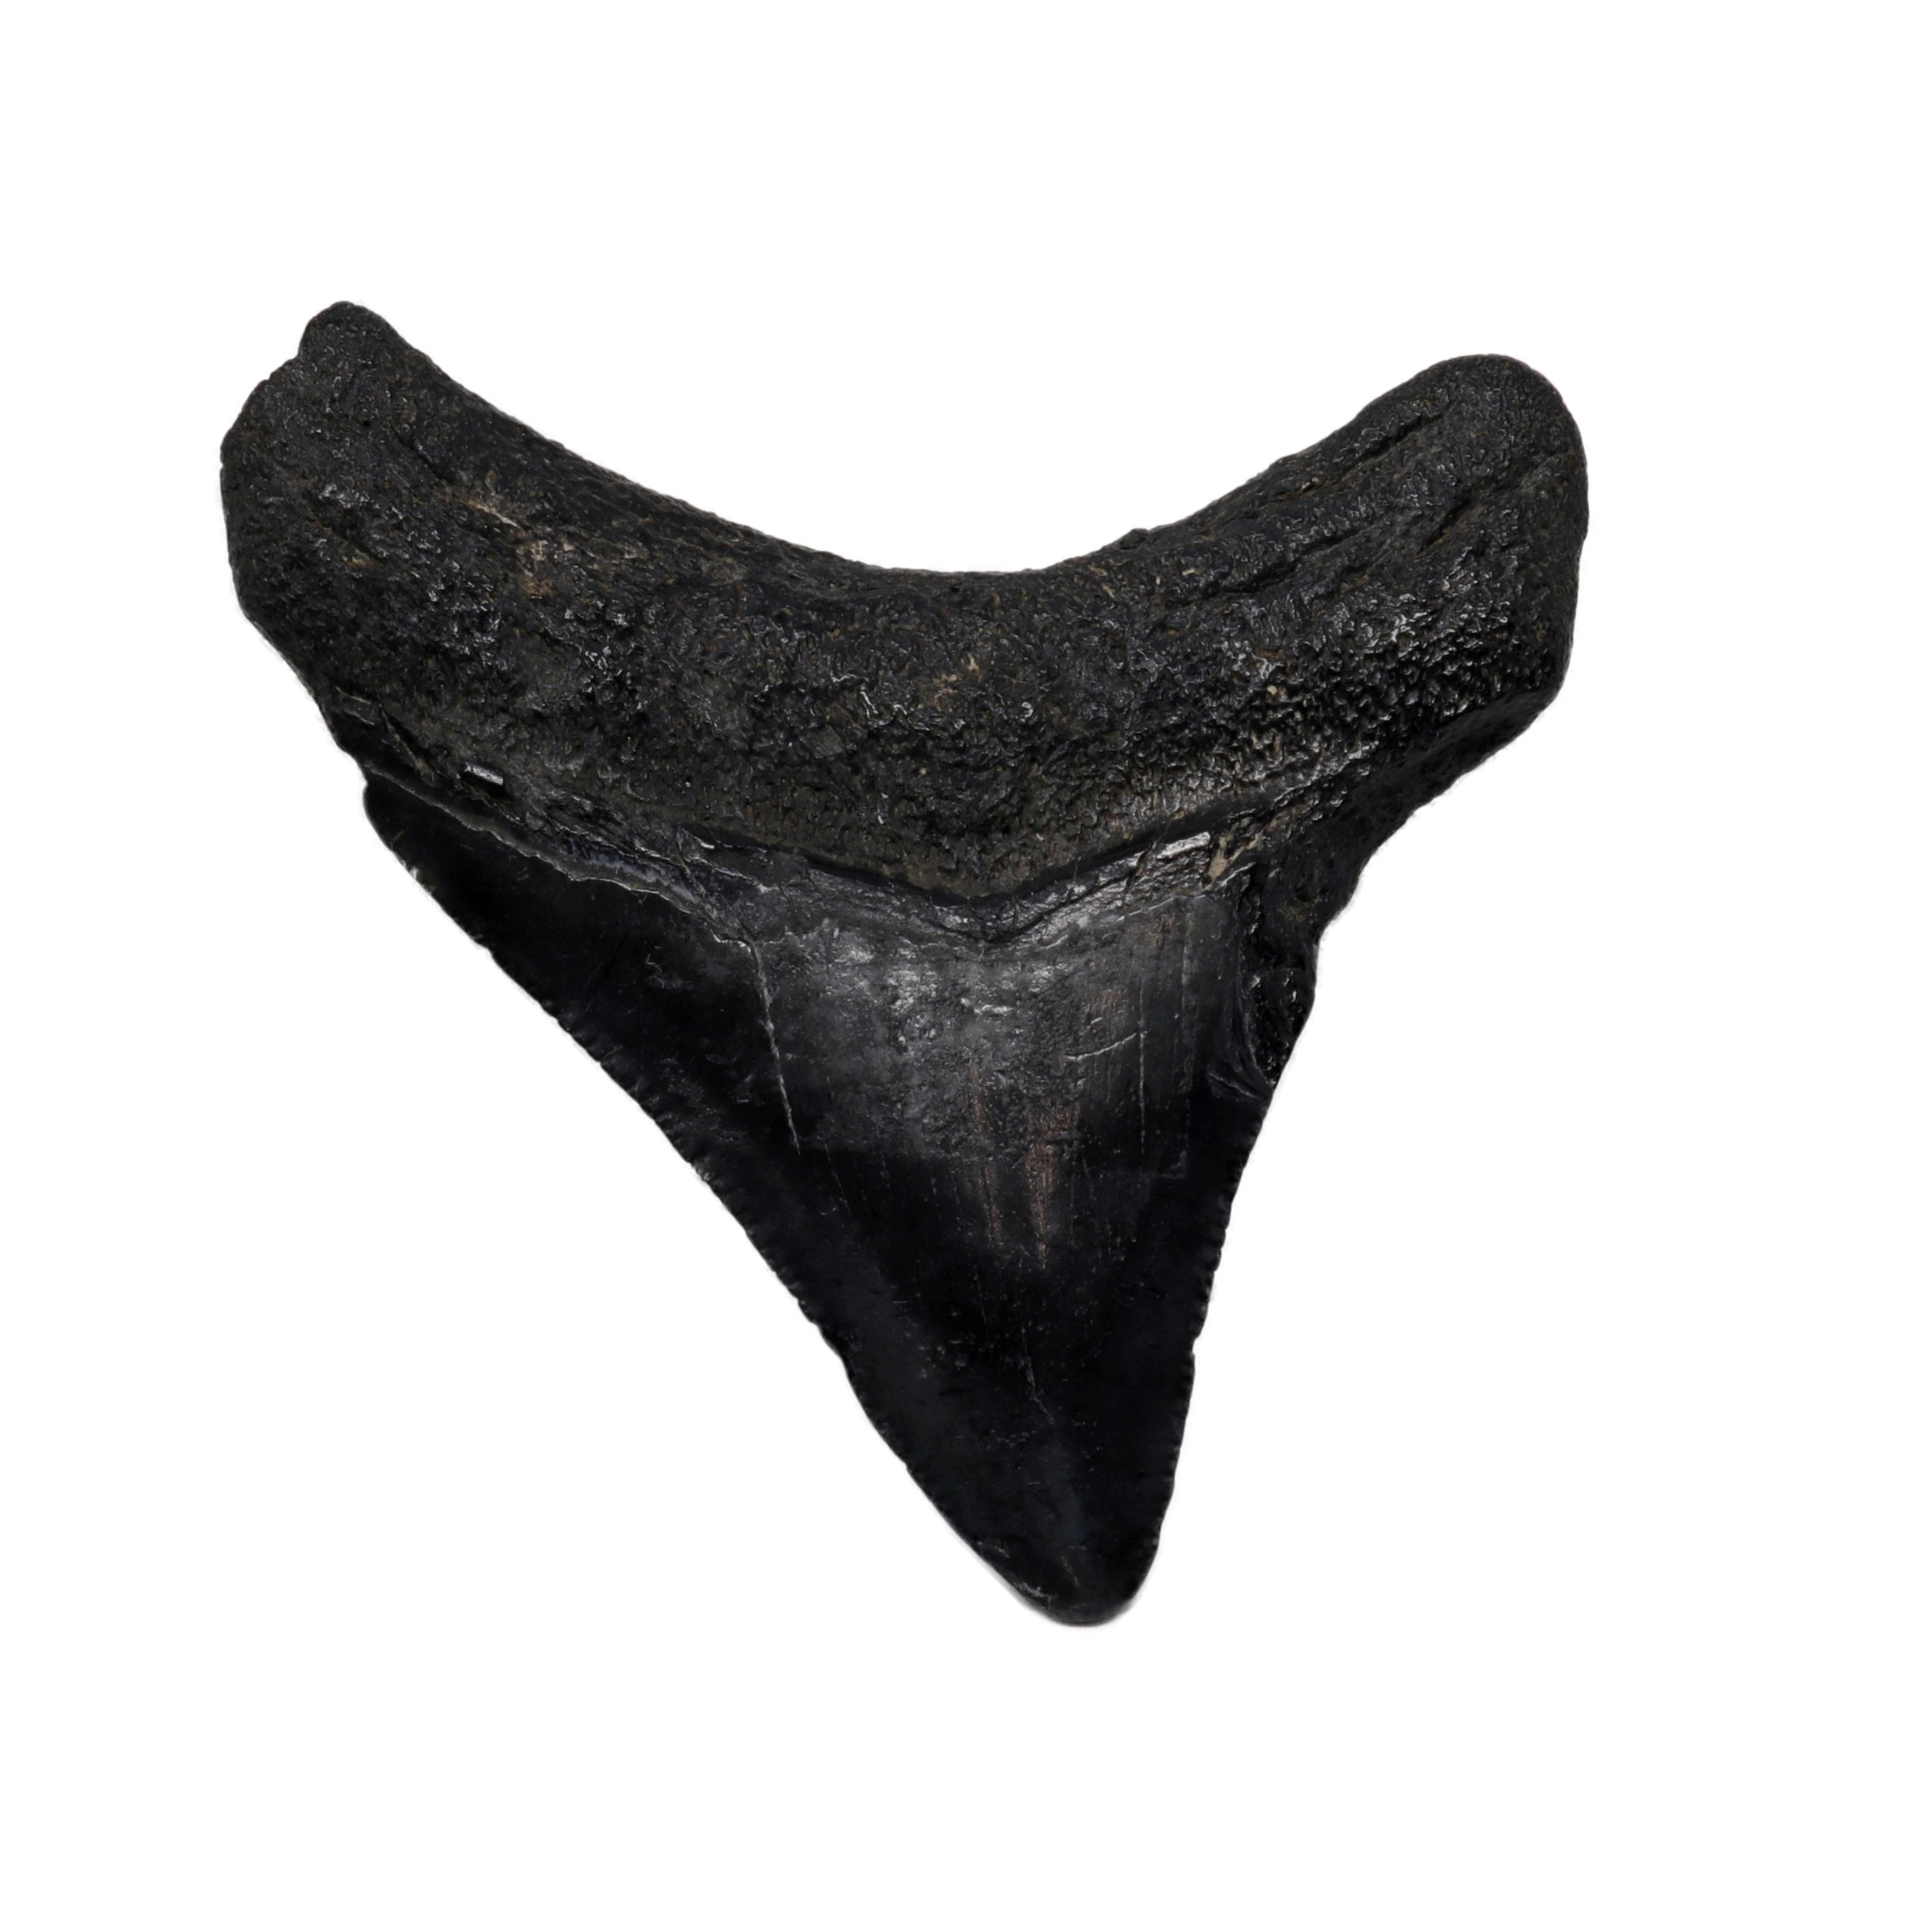 Megalodon Shark Tooth - Medium from South Carolina